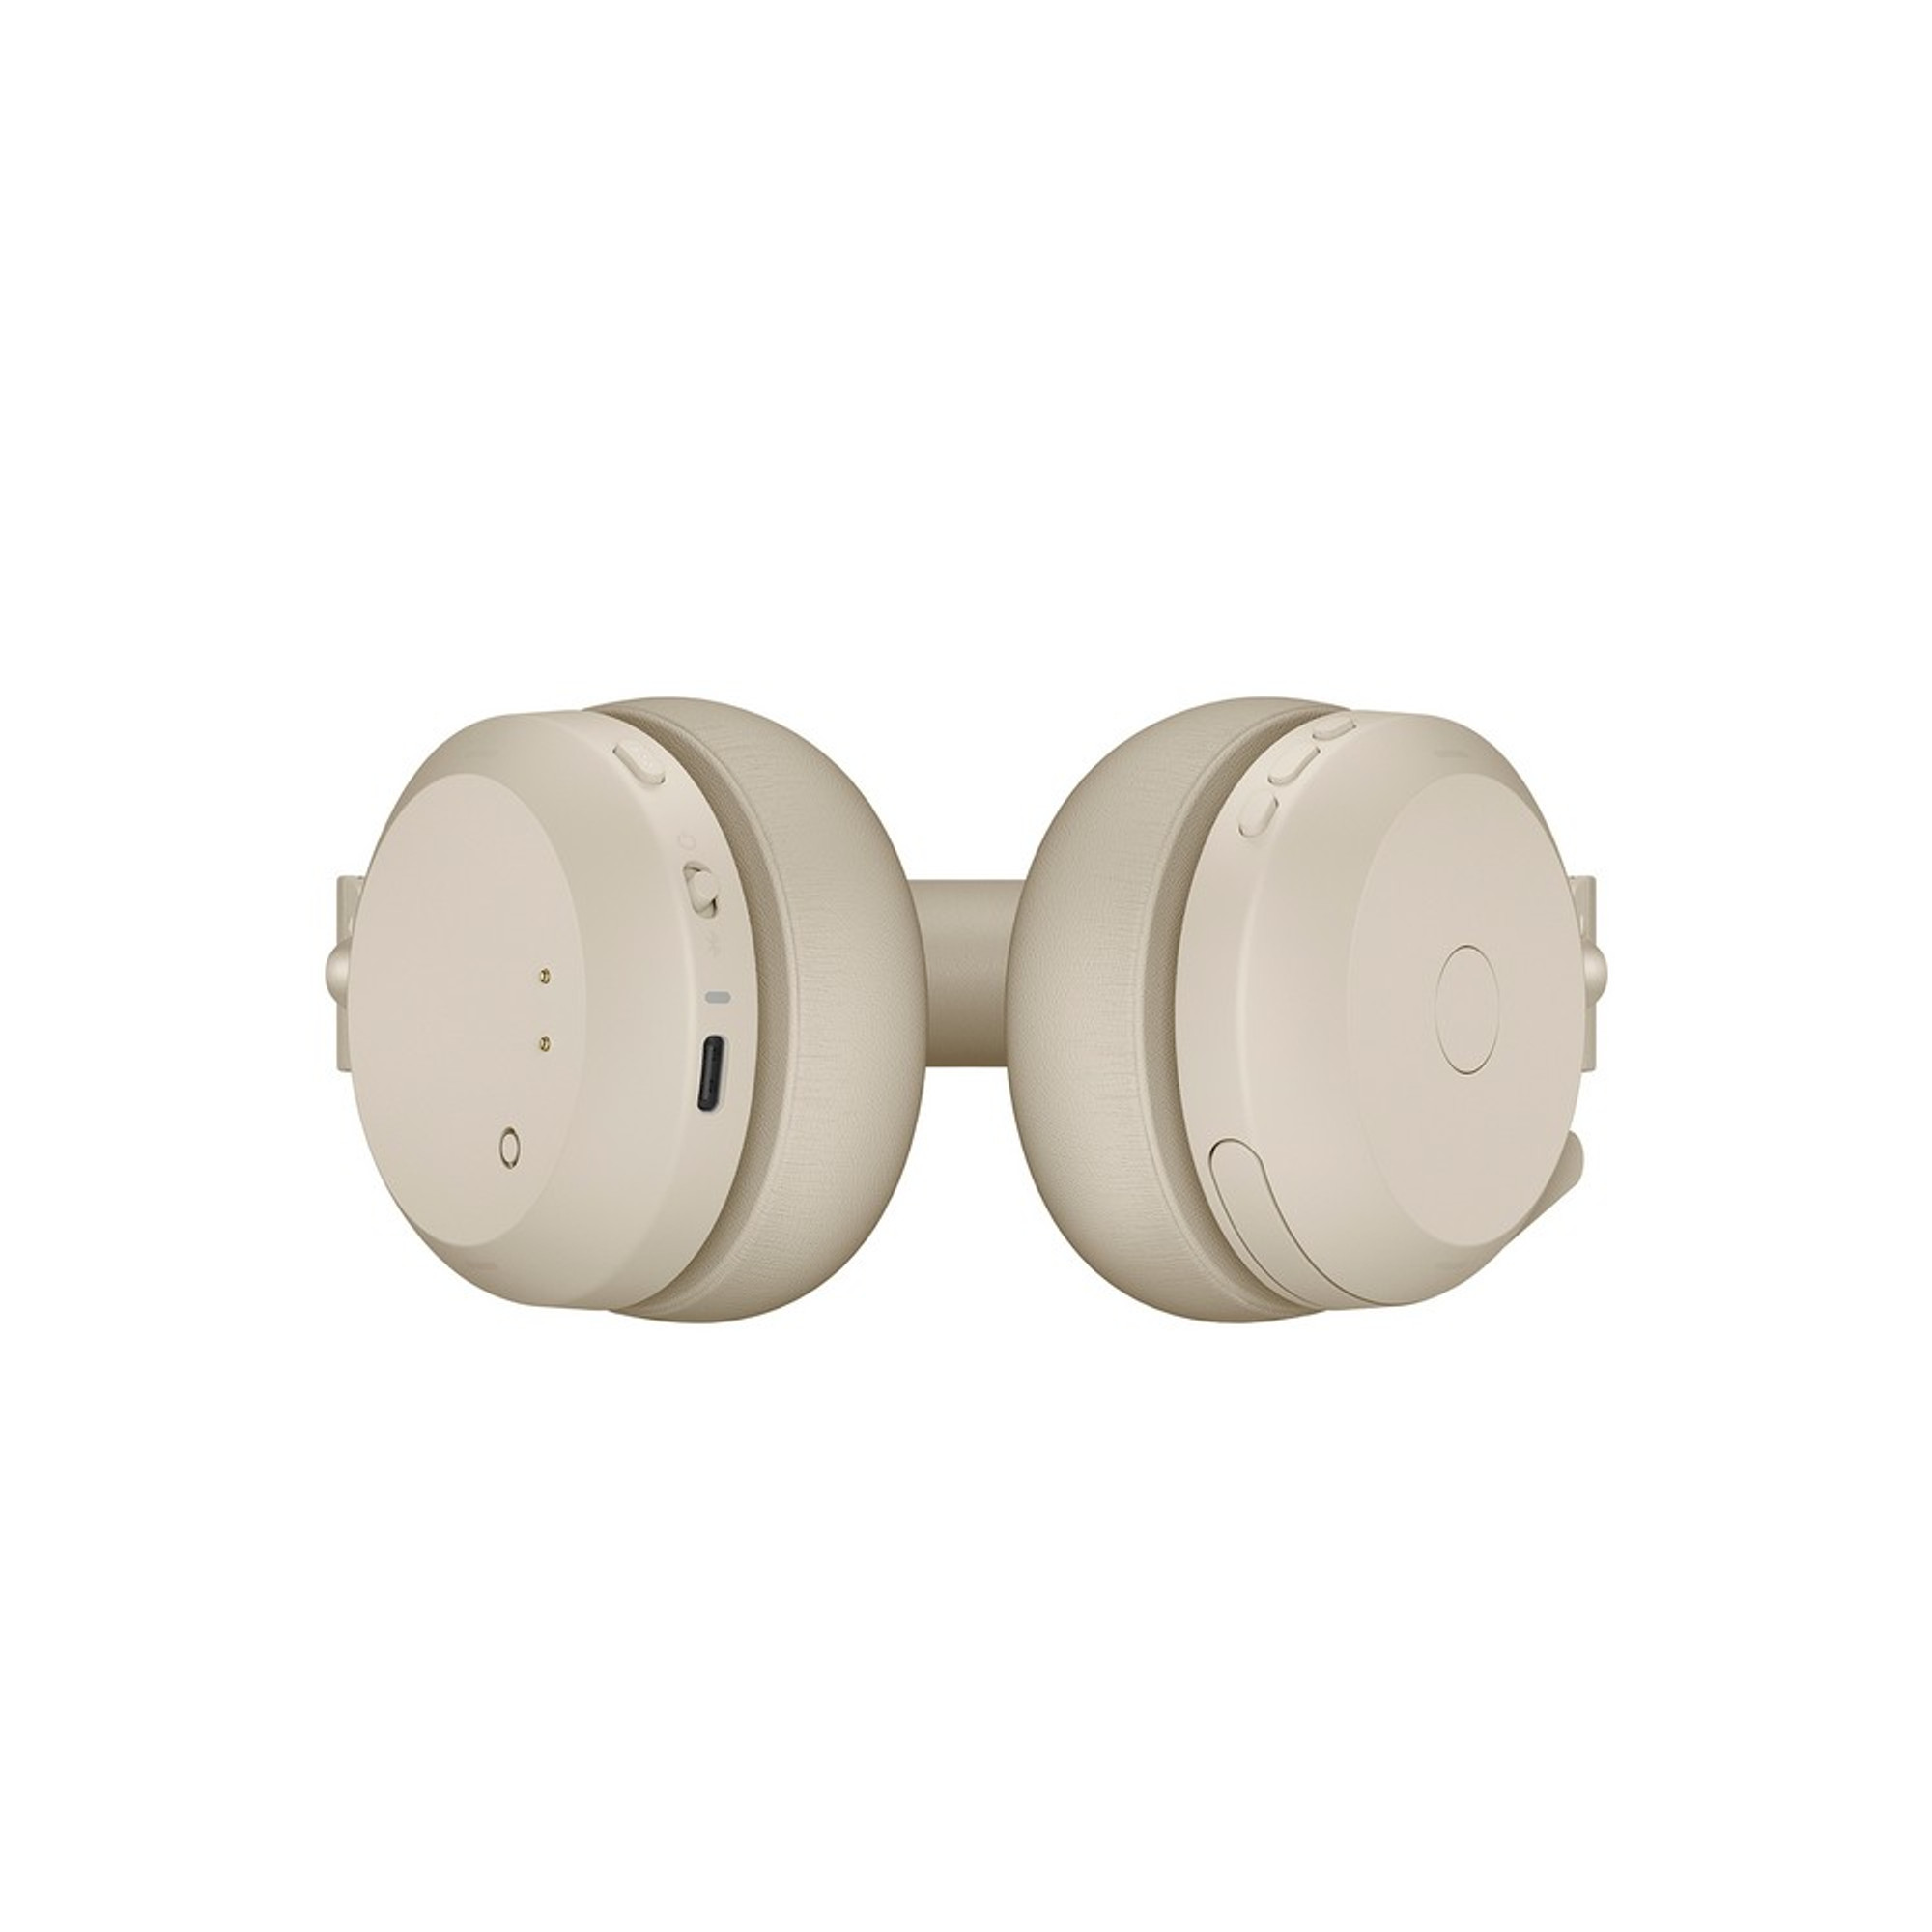 Jabra Link 380 Bluetooth Adapter - Headsets Direct